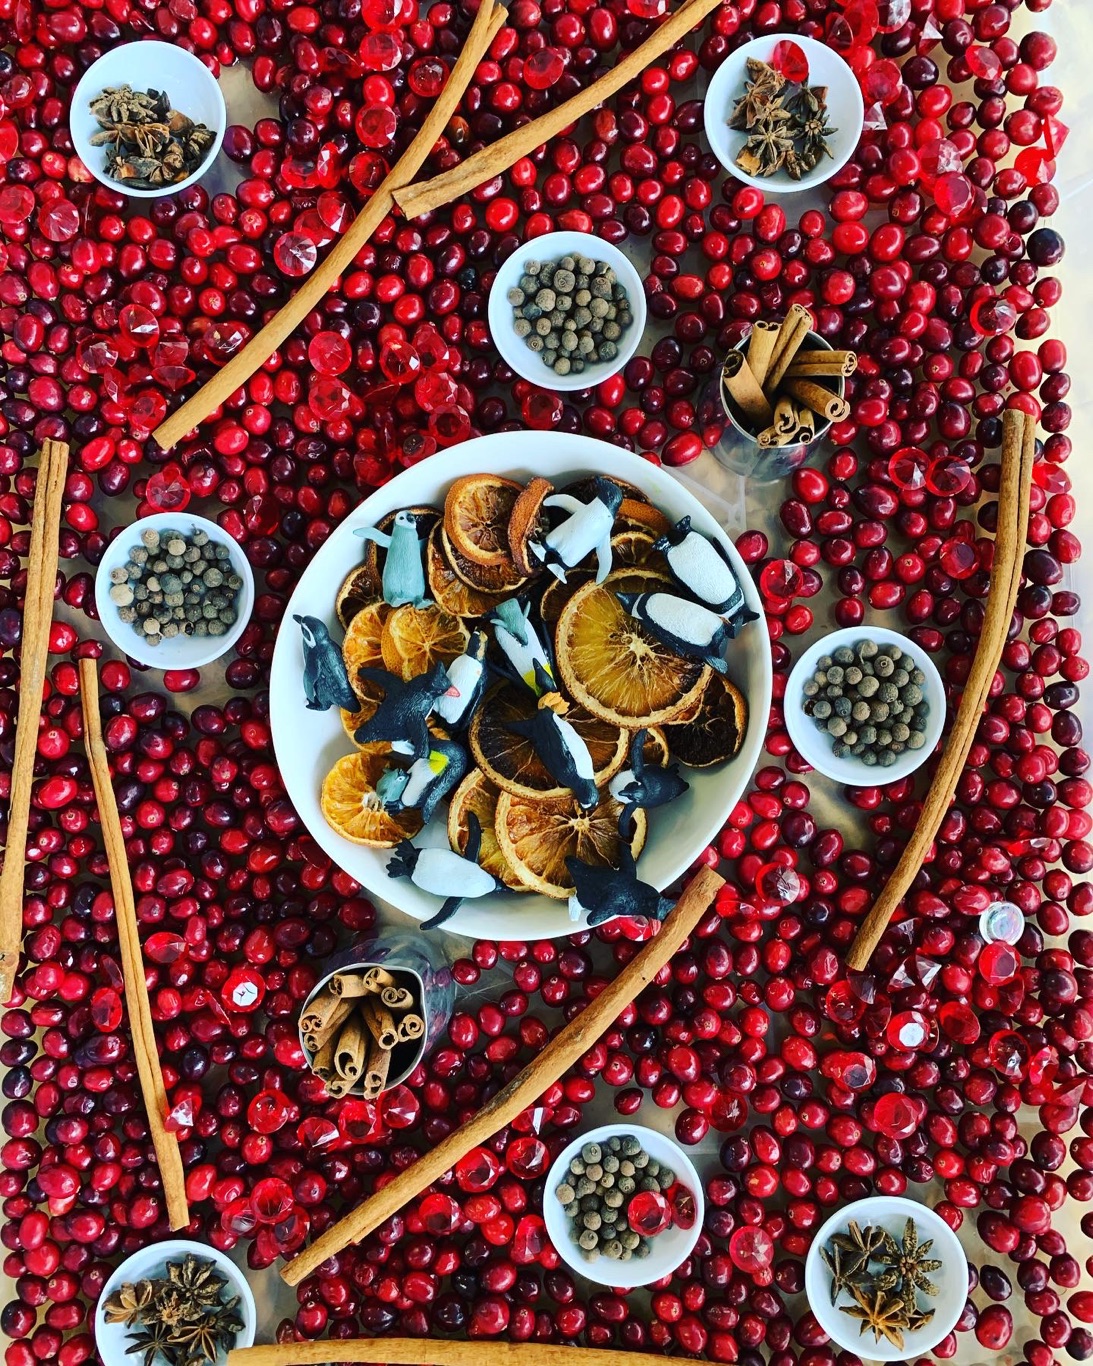 Winter themed sensory bin with cinnamon sticks, cranberries & orange slices